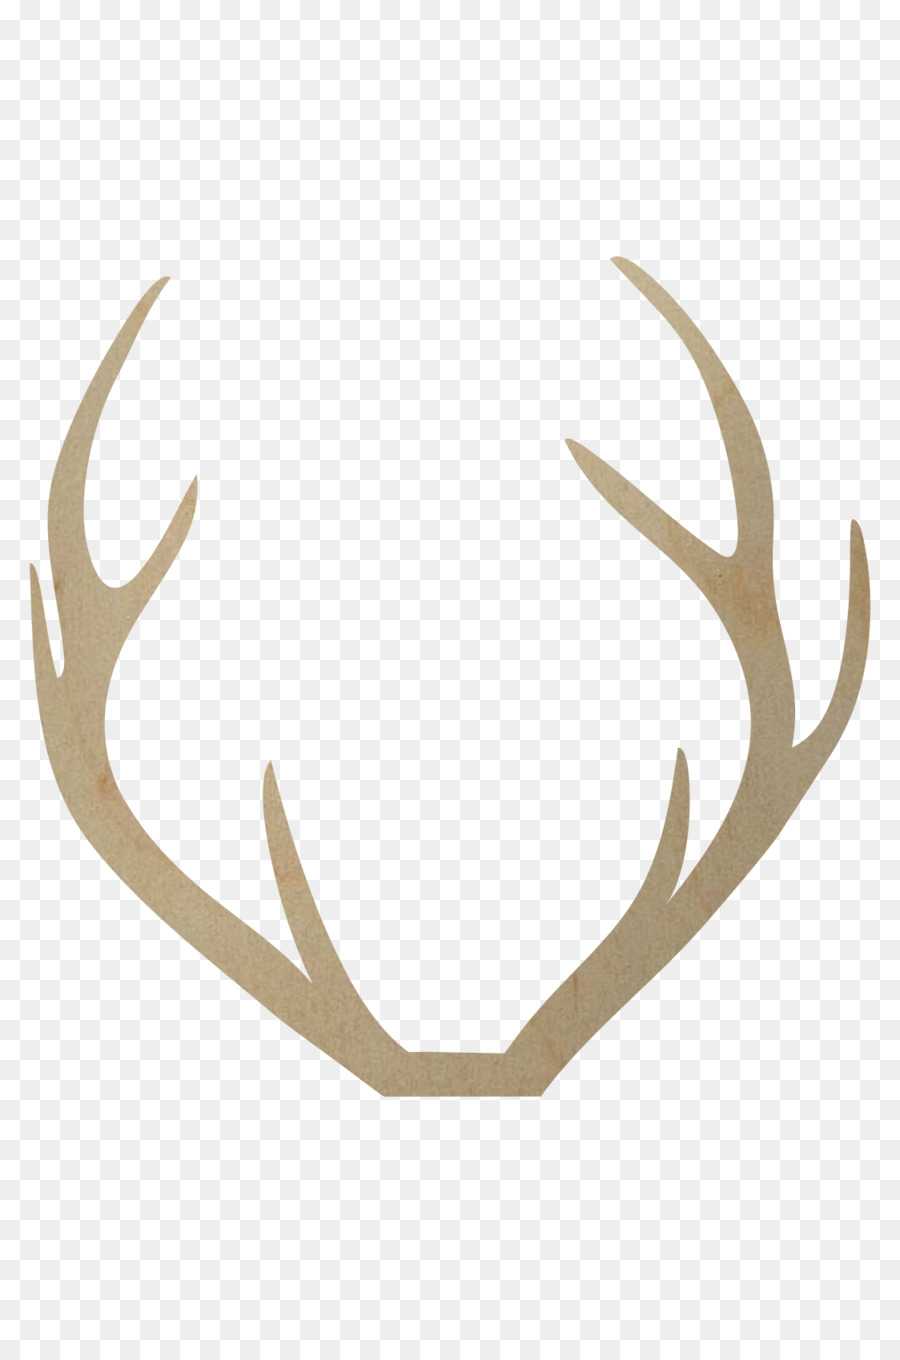 Red deer Antler Reindeer Elk - deer png download - 1124*1690 - Free Transparent Deer png Download.